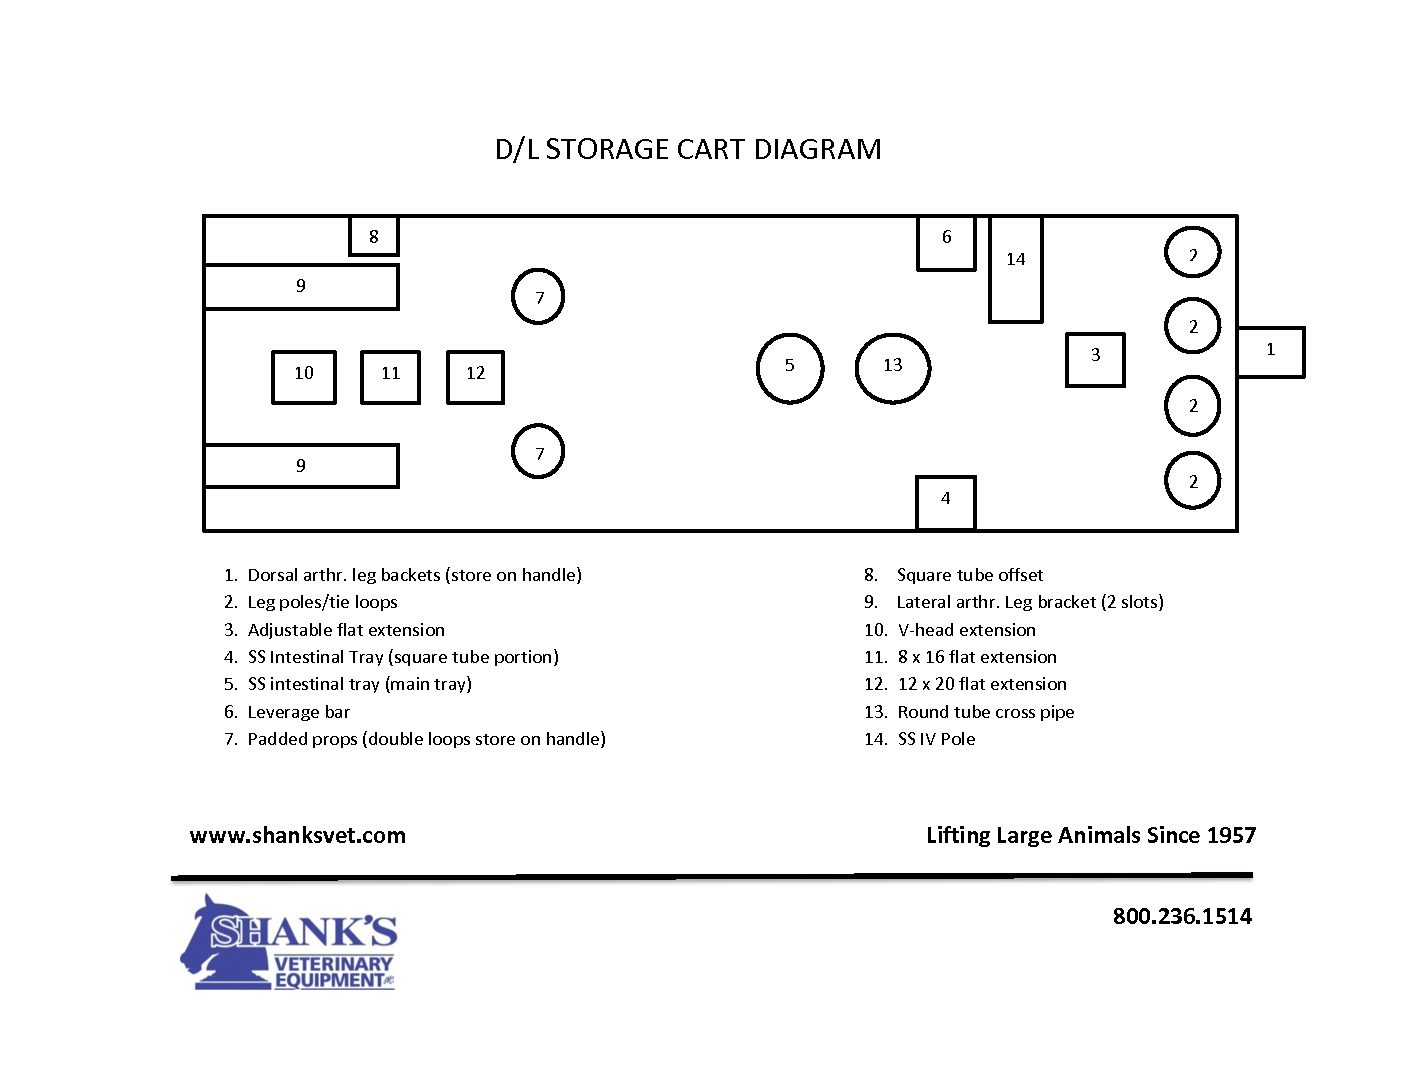 DL Storage Cart Diagram